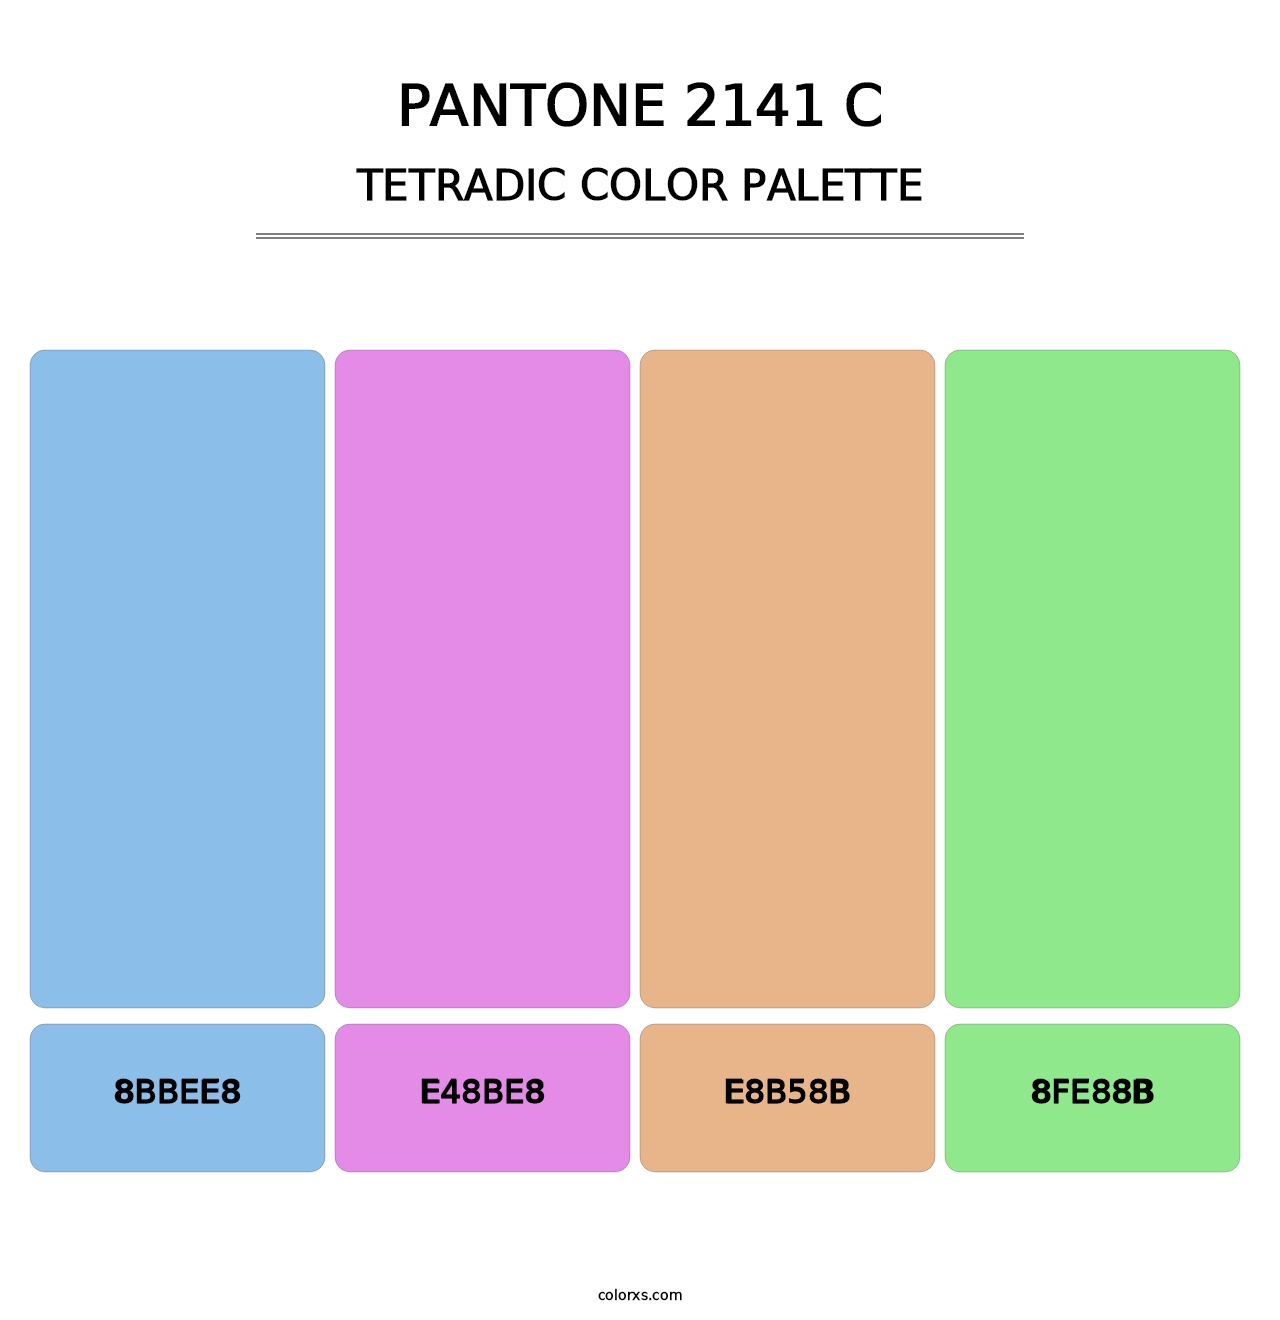 PANTONE 2141 C - Tetradic Color Palette